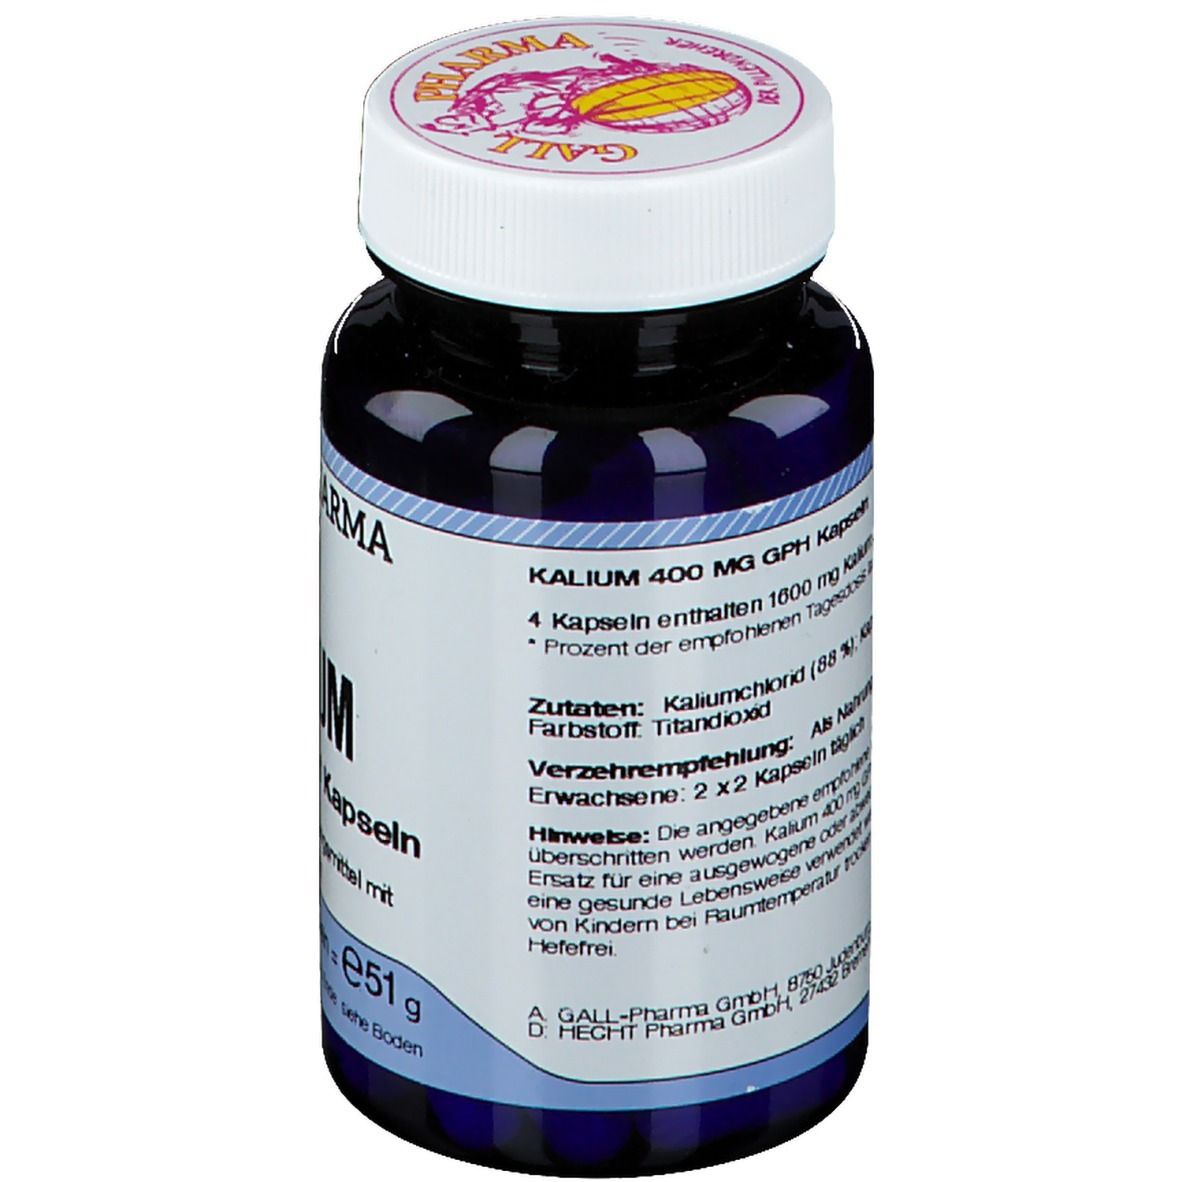 GALL PHARMA Kalium 400 mg GPH Kapseln